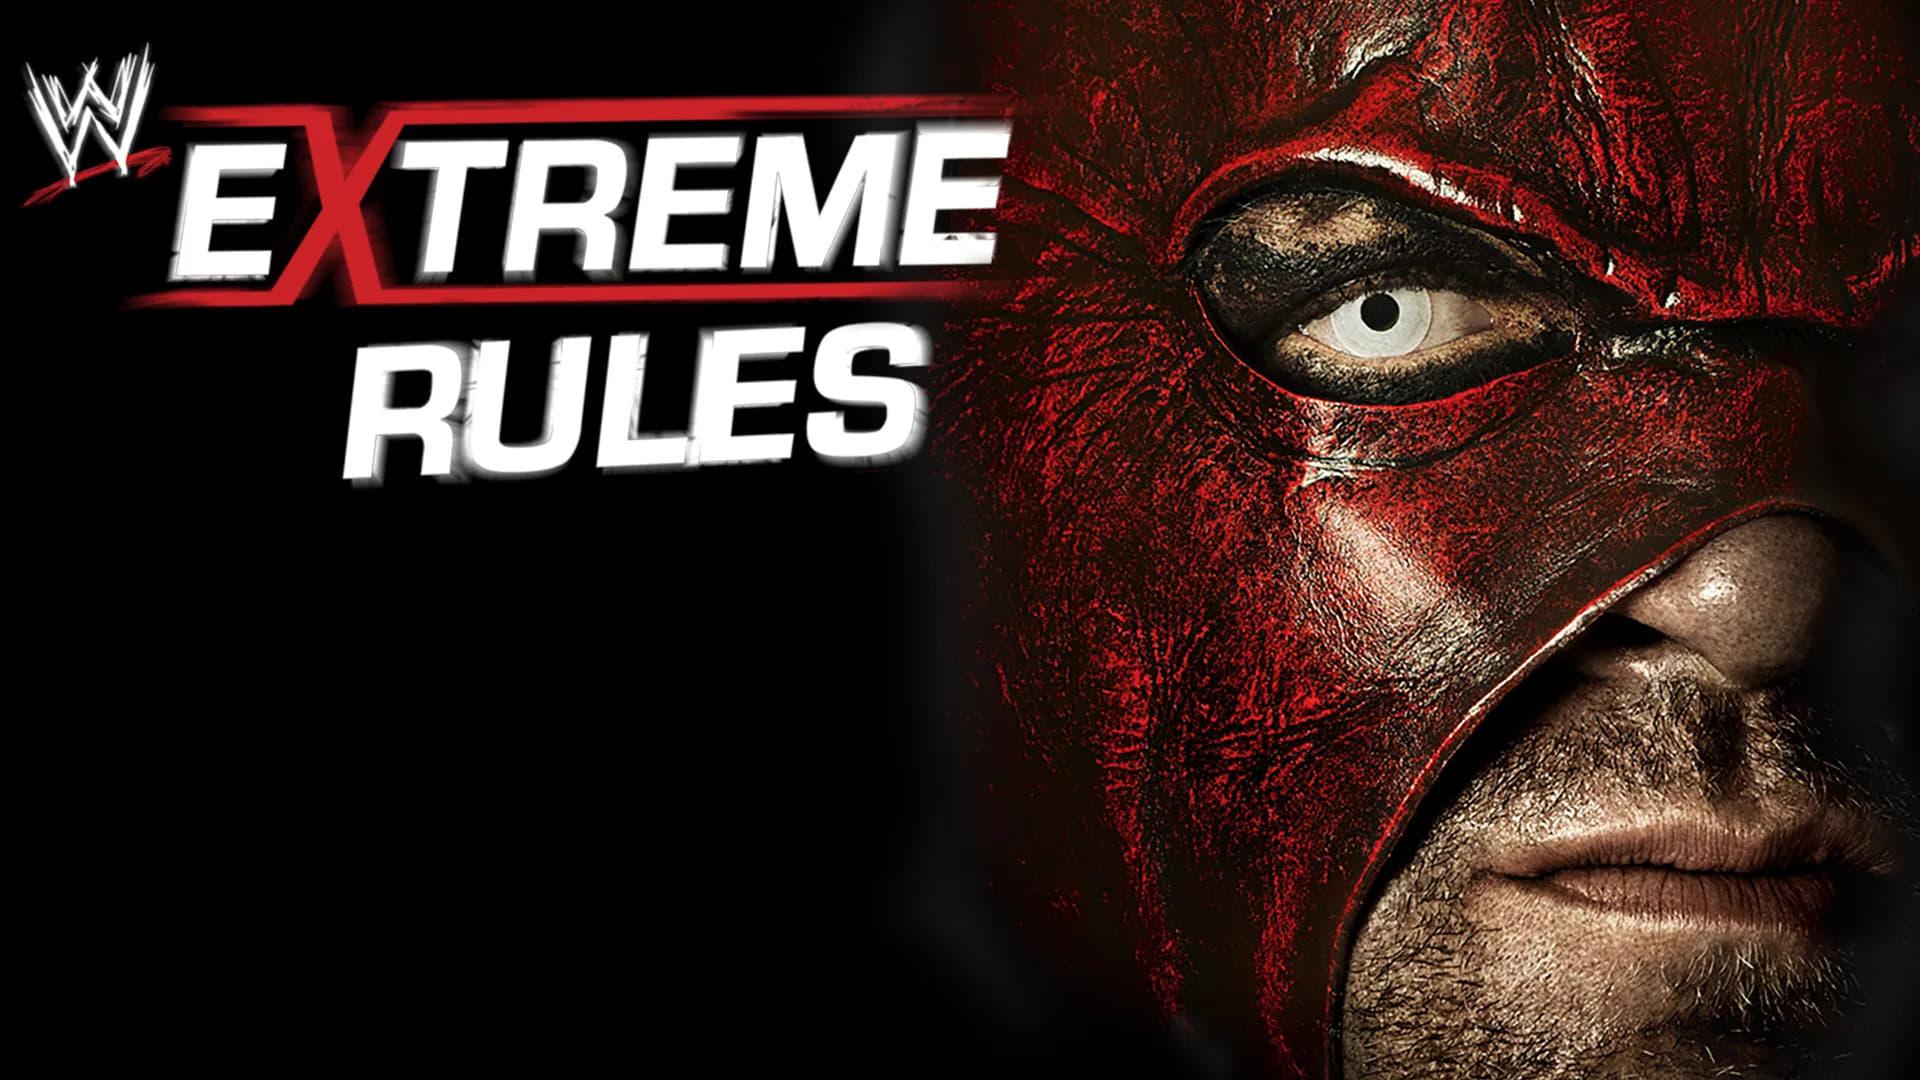 WWE Extreme Rules 2012 backdrop